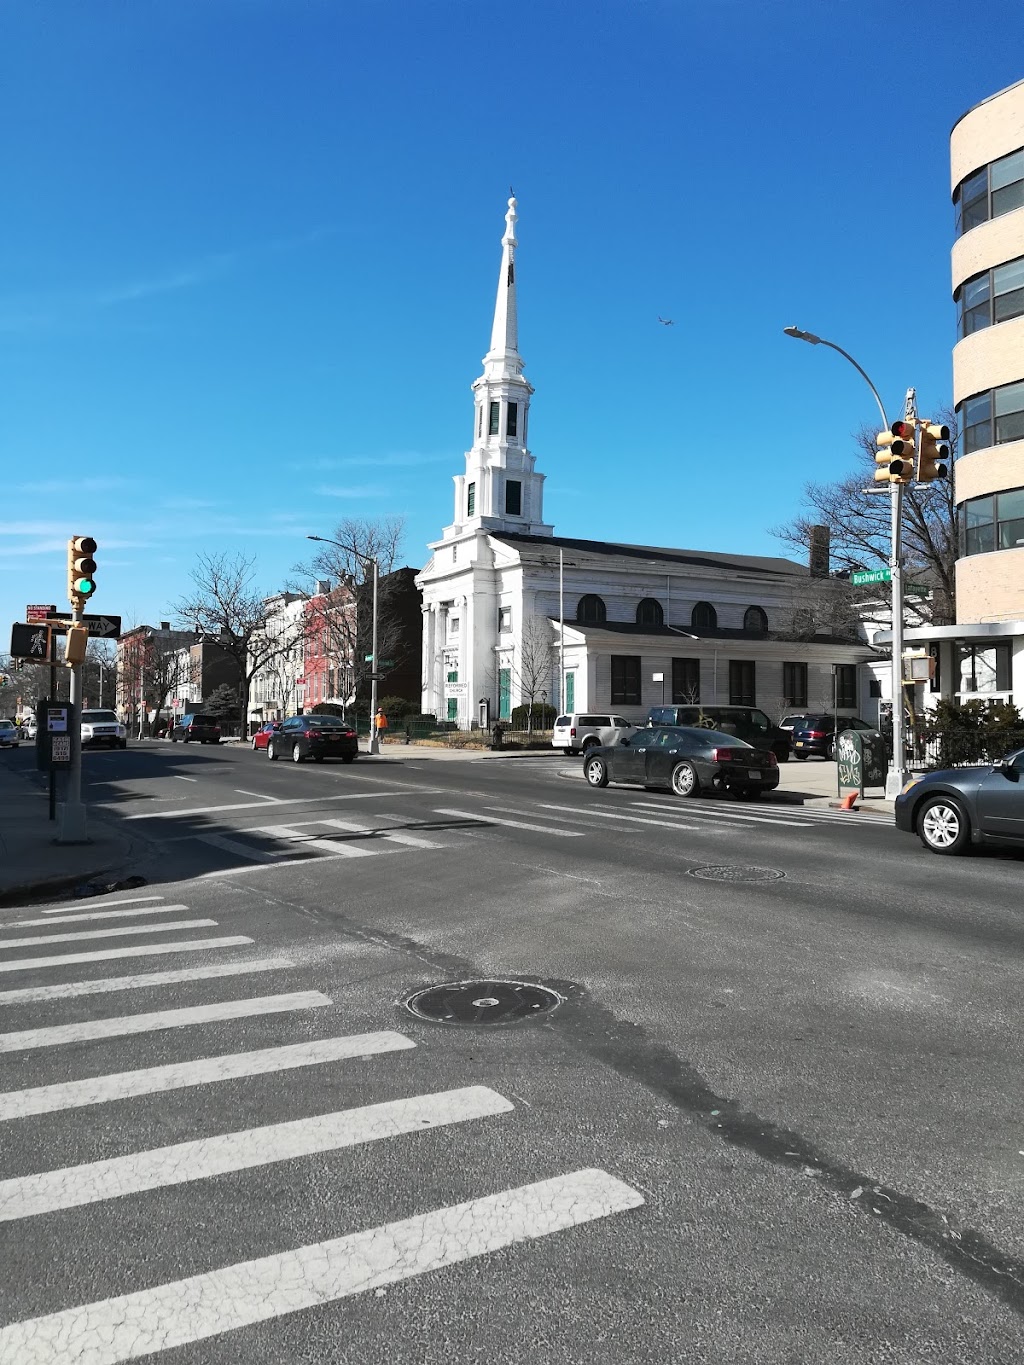 South Bushwick Church | 855 Bushwick Ave, Brooklyn, NY 11221 | Phone: (347) 350-6110